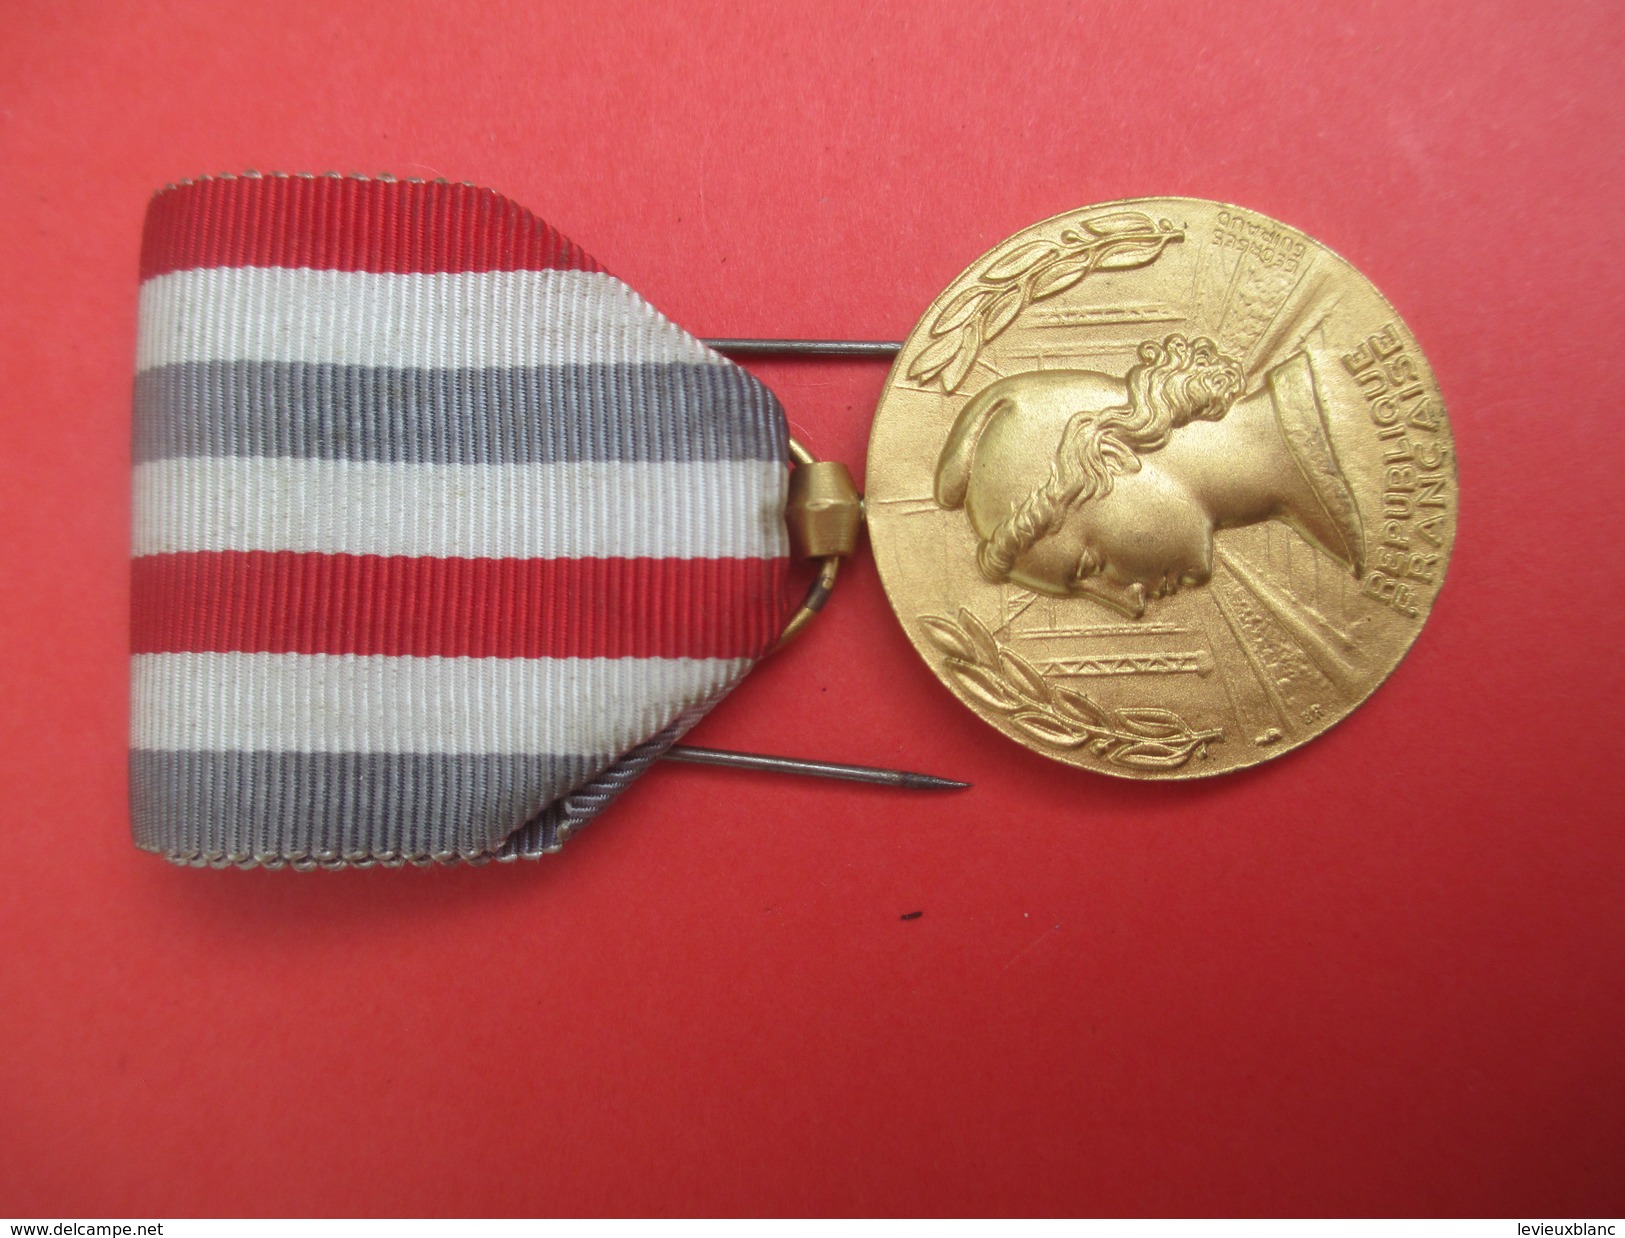 2 Médailles  Des Chemins De Fer/ Argent Et Or/ R Labarre/ 1948 Et 1958      Med176 - France